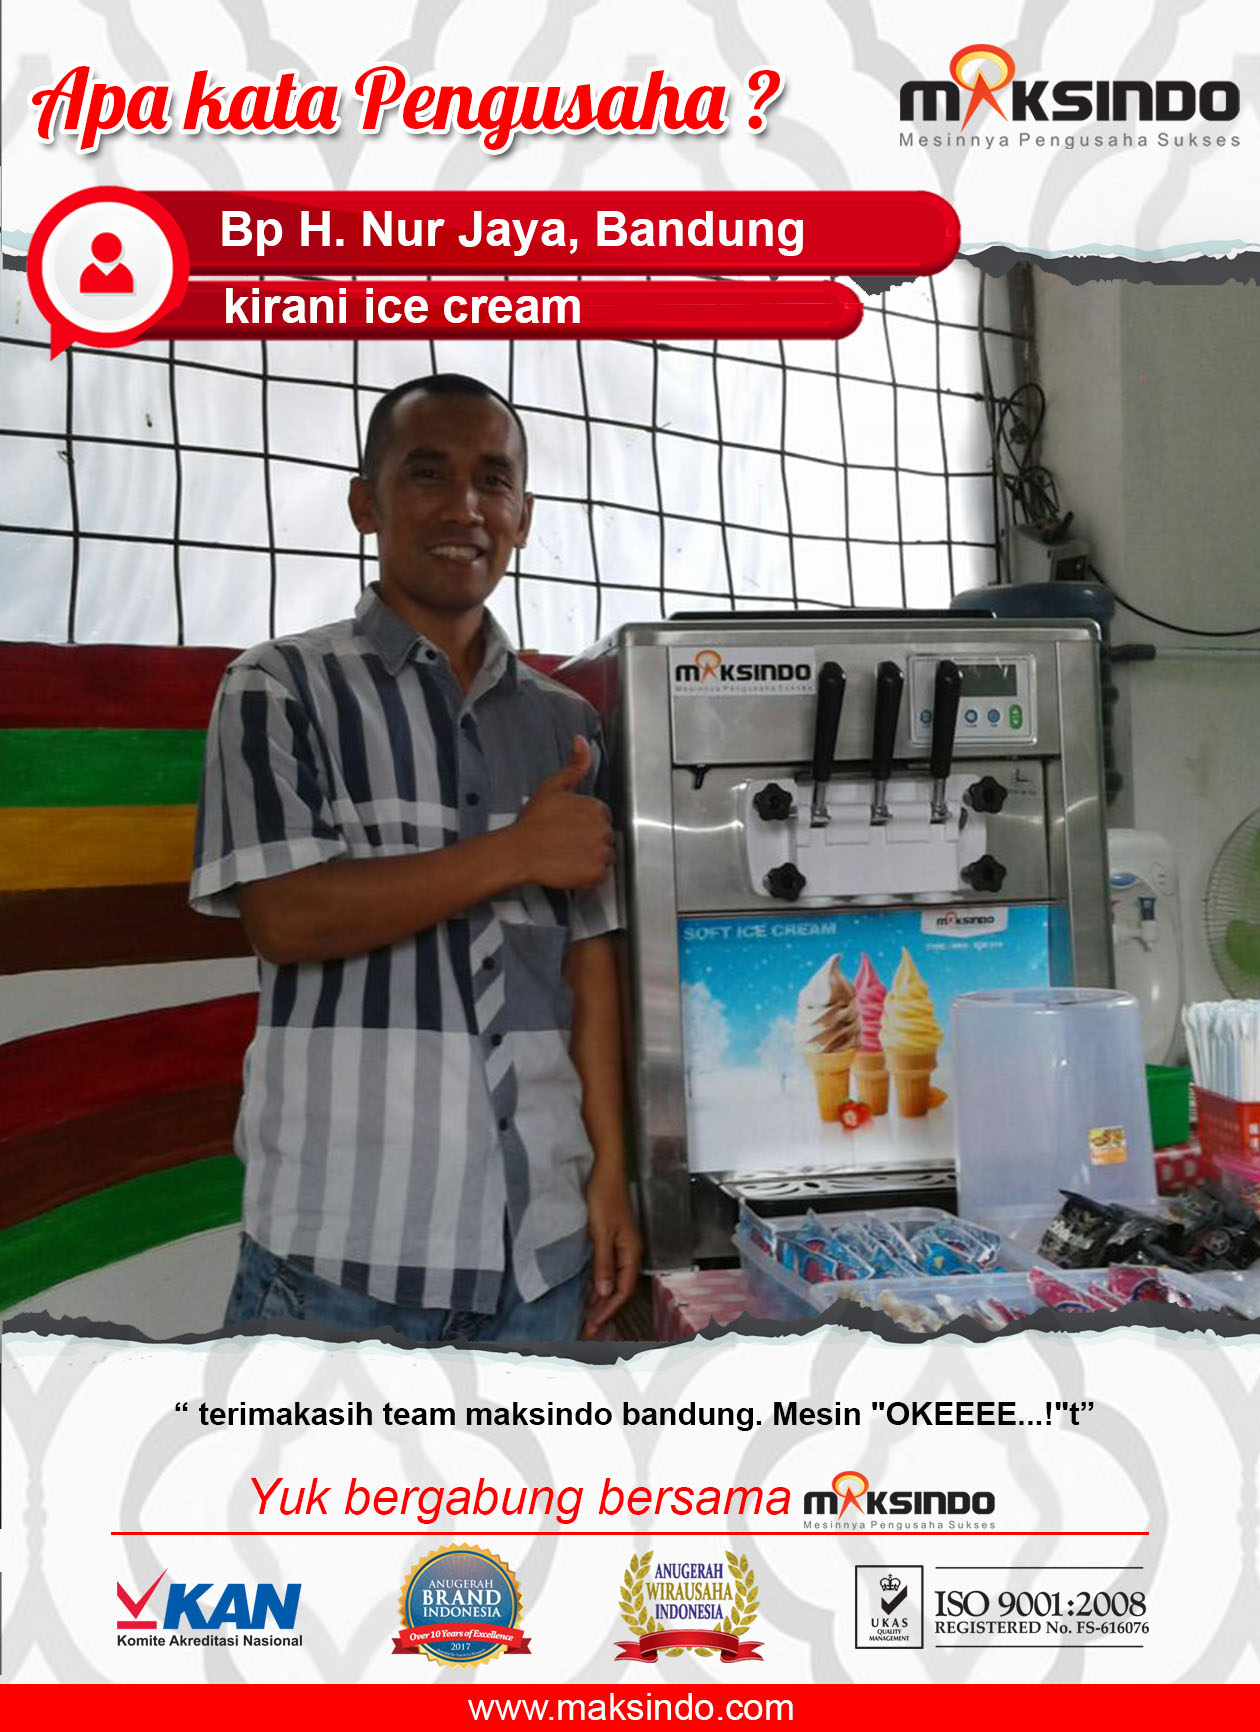 Kirani Ice Cream : Mesin Maksindo Memang Paling Oke